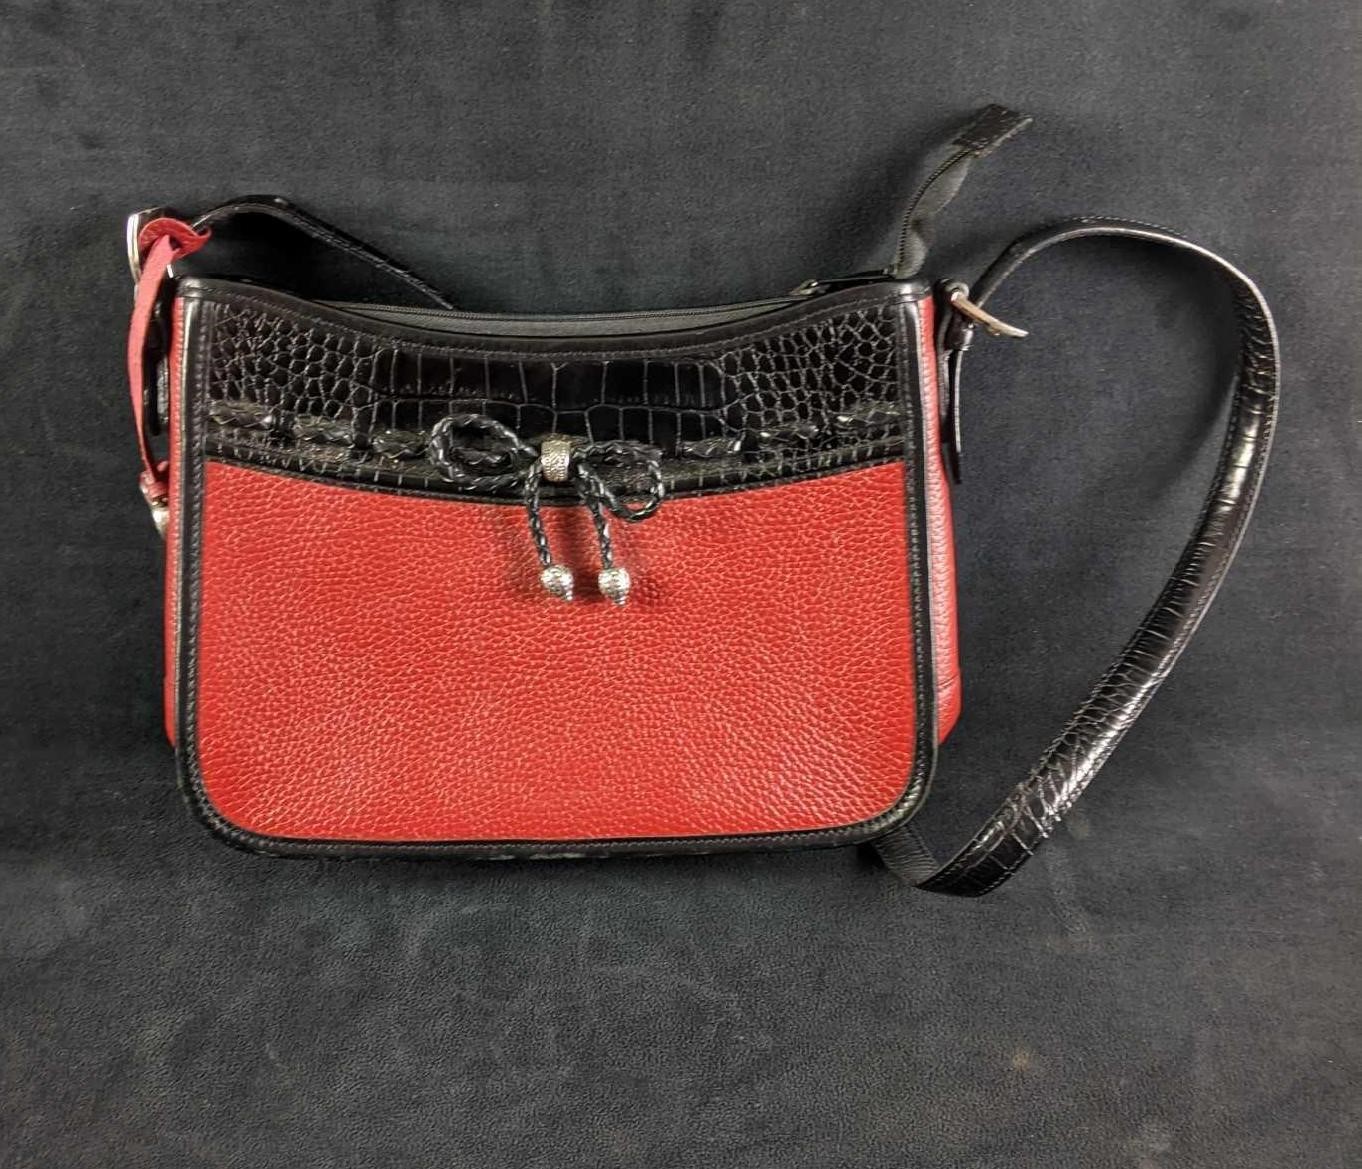 Brighton Leather Handbag Red and Black Pebble Leat